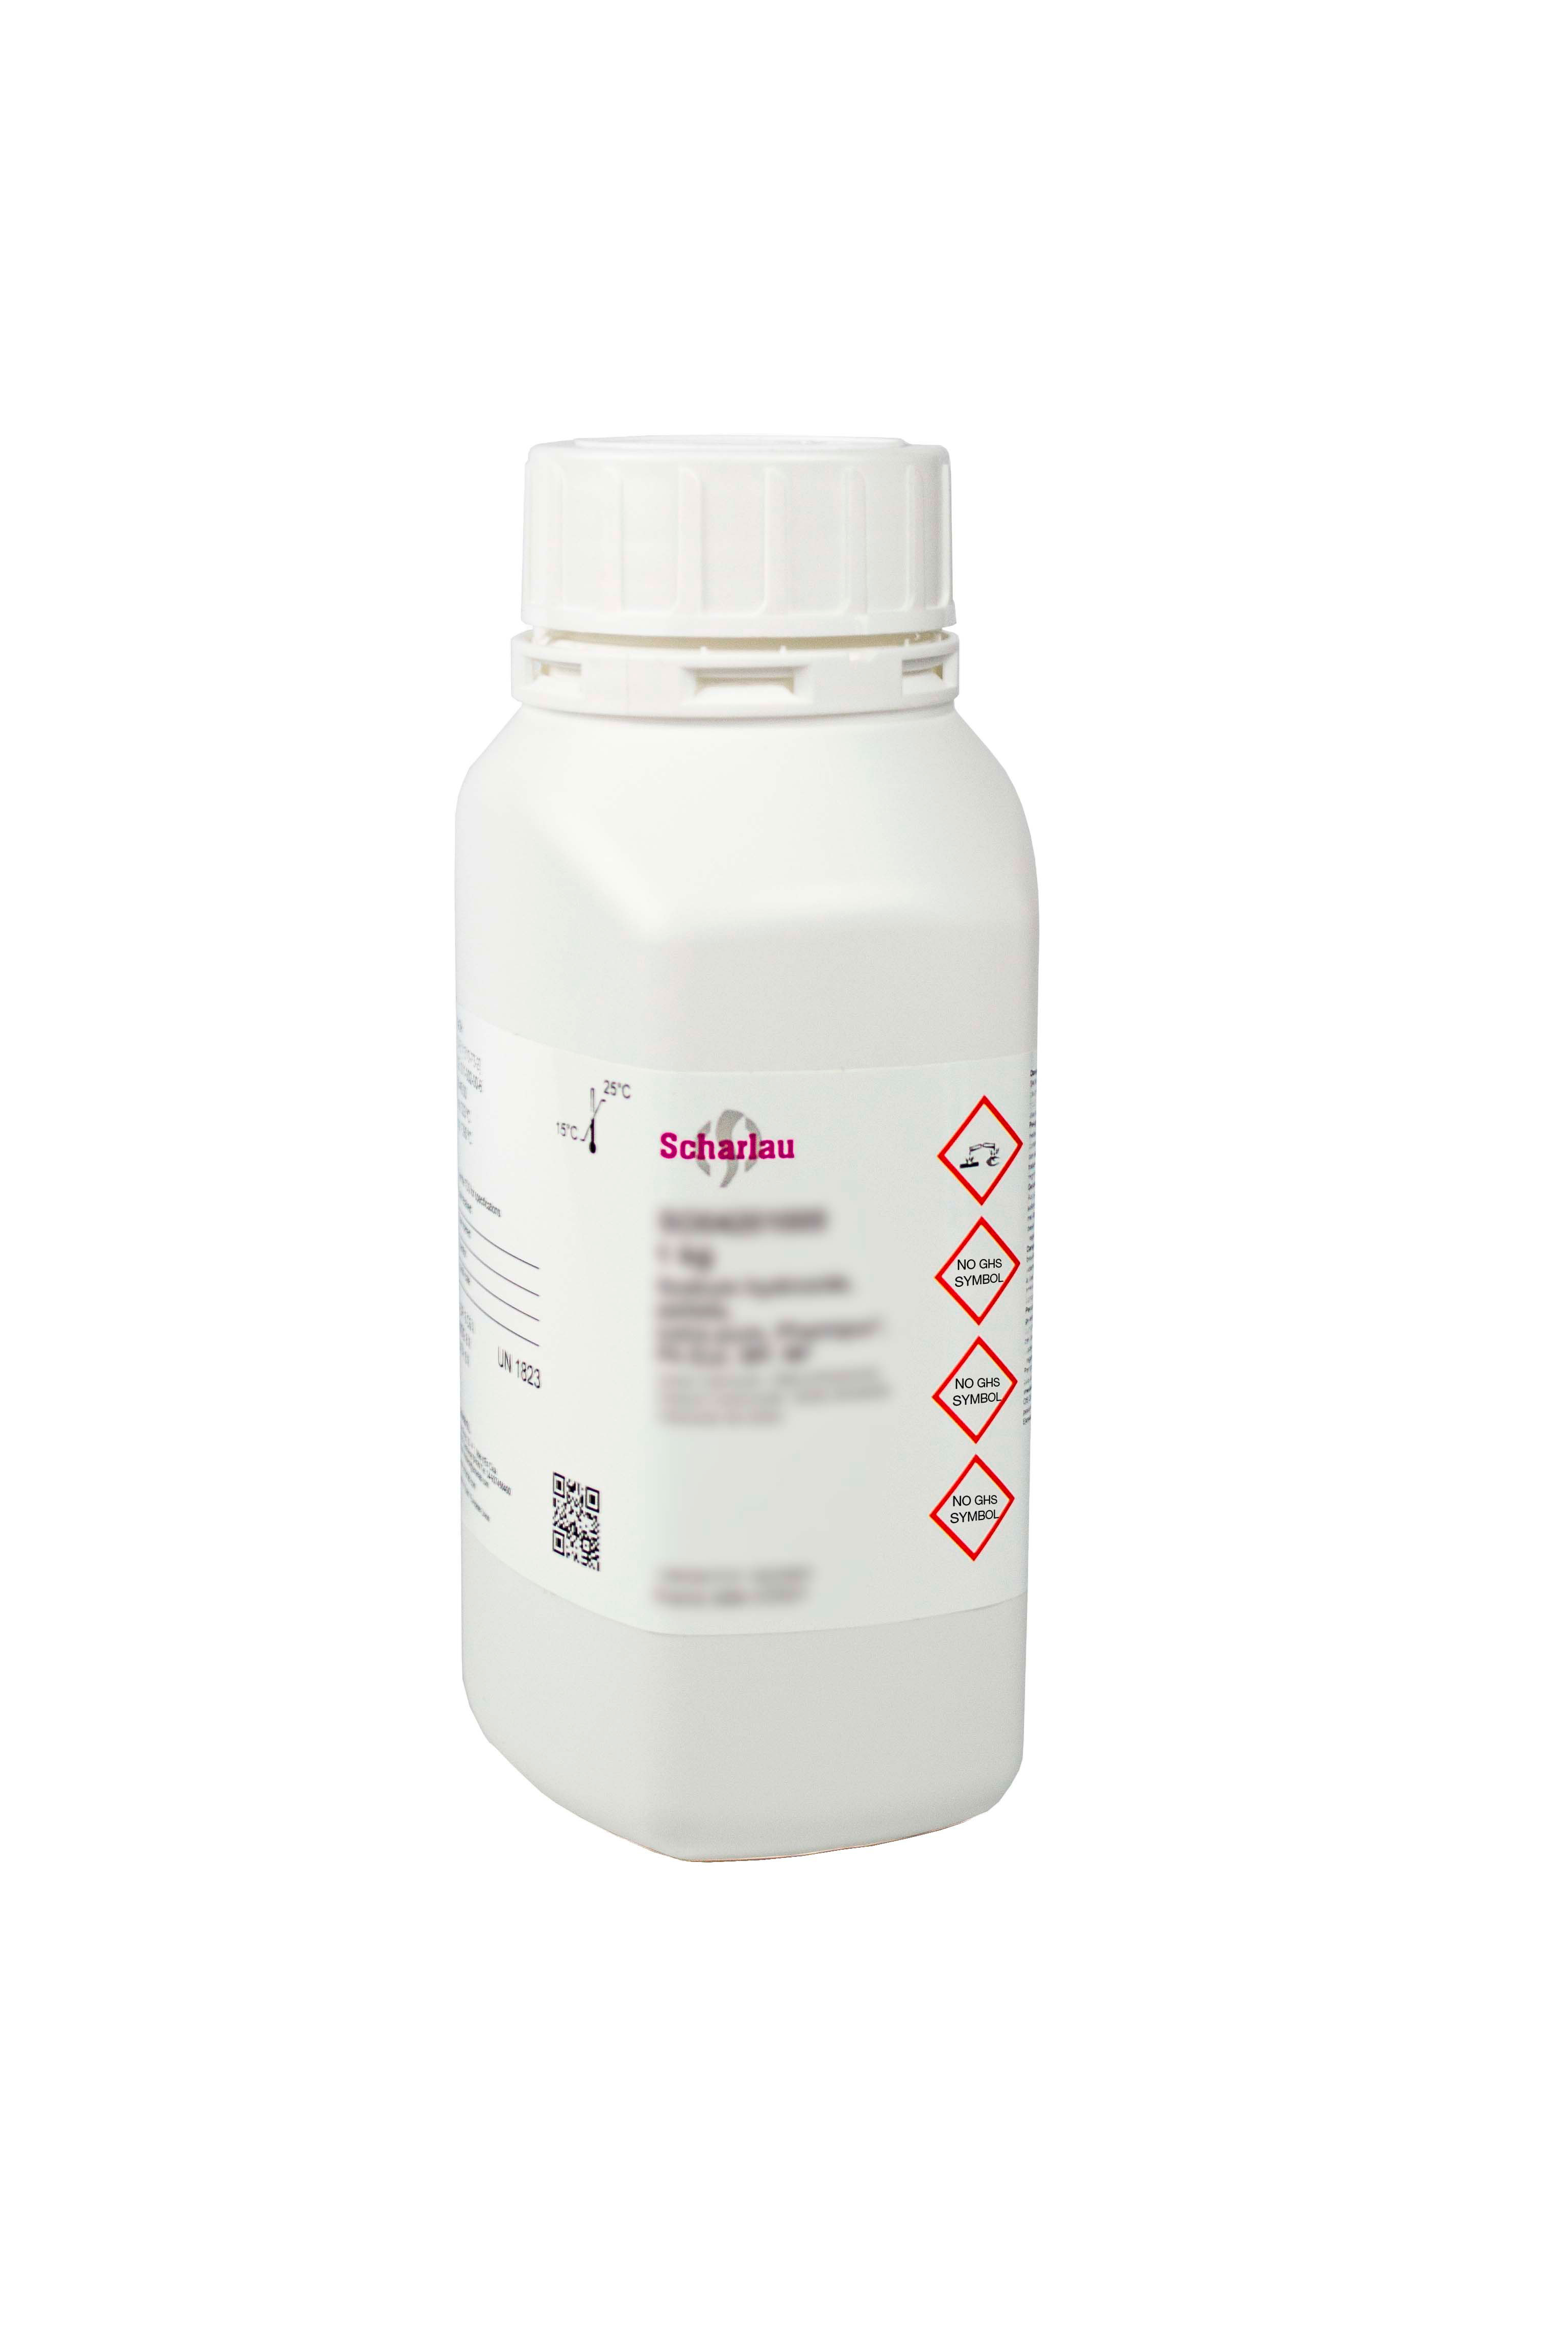 Potasio sodio tartrato tetrahidrato, para análisis, ExpertQ®, ACS, ISO